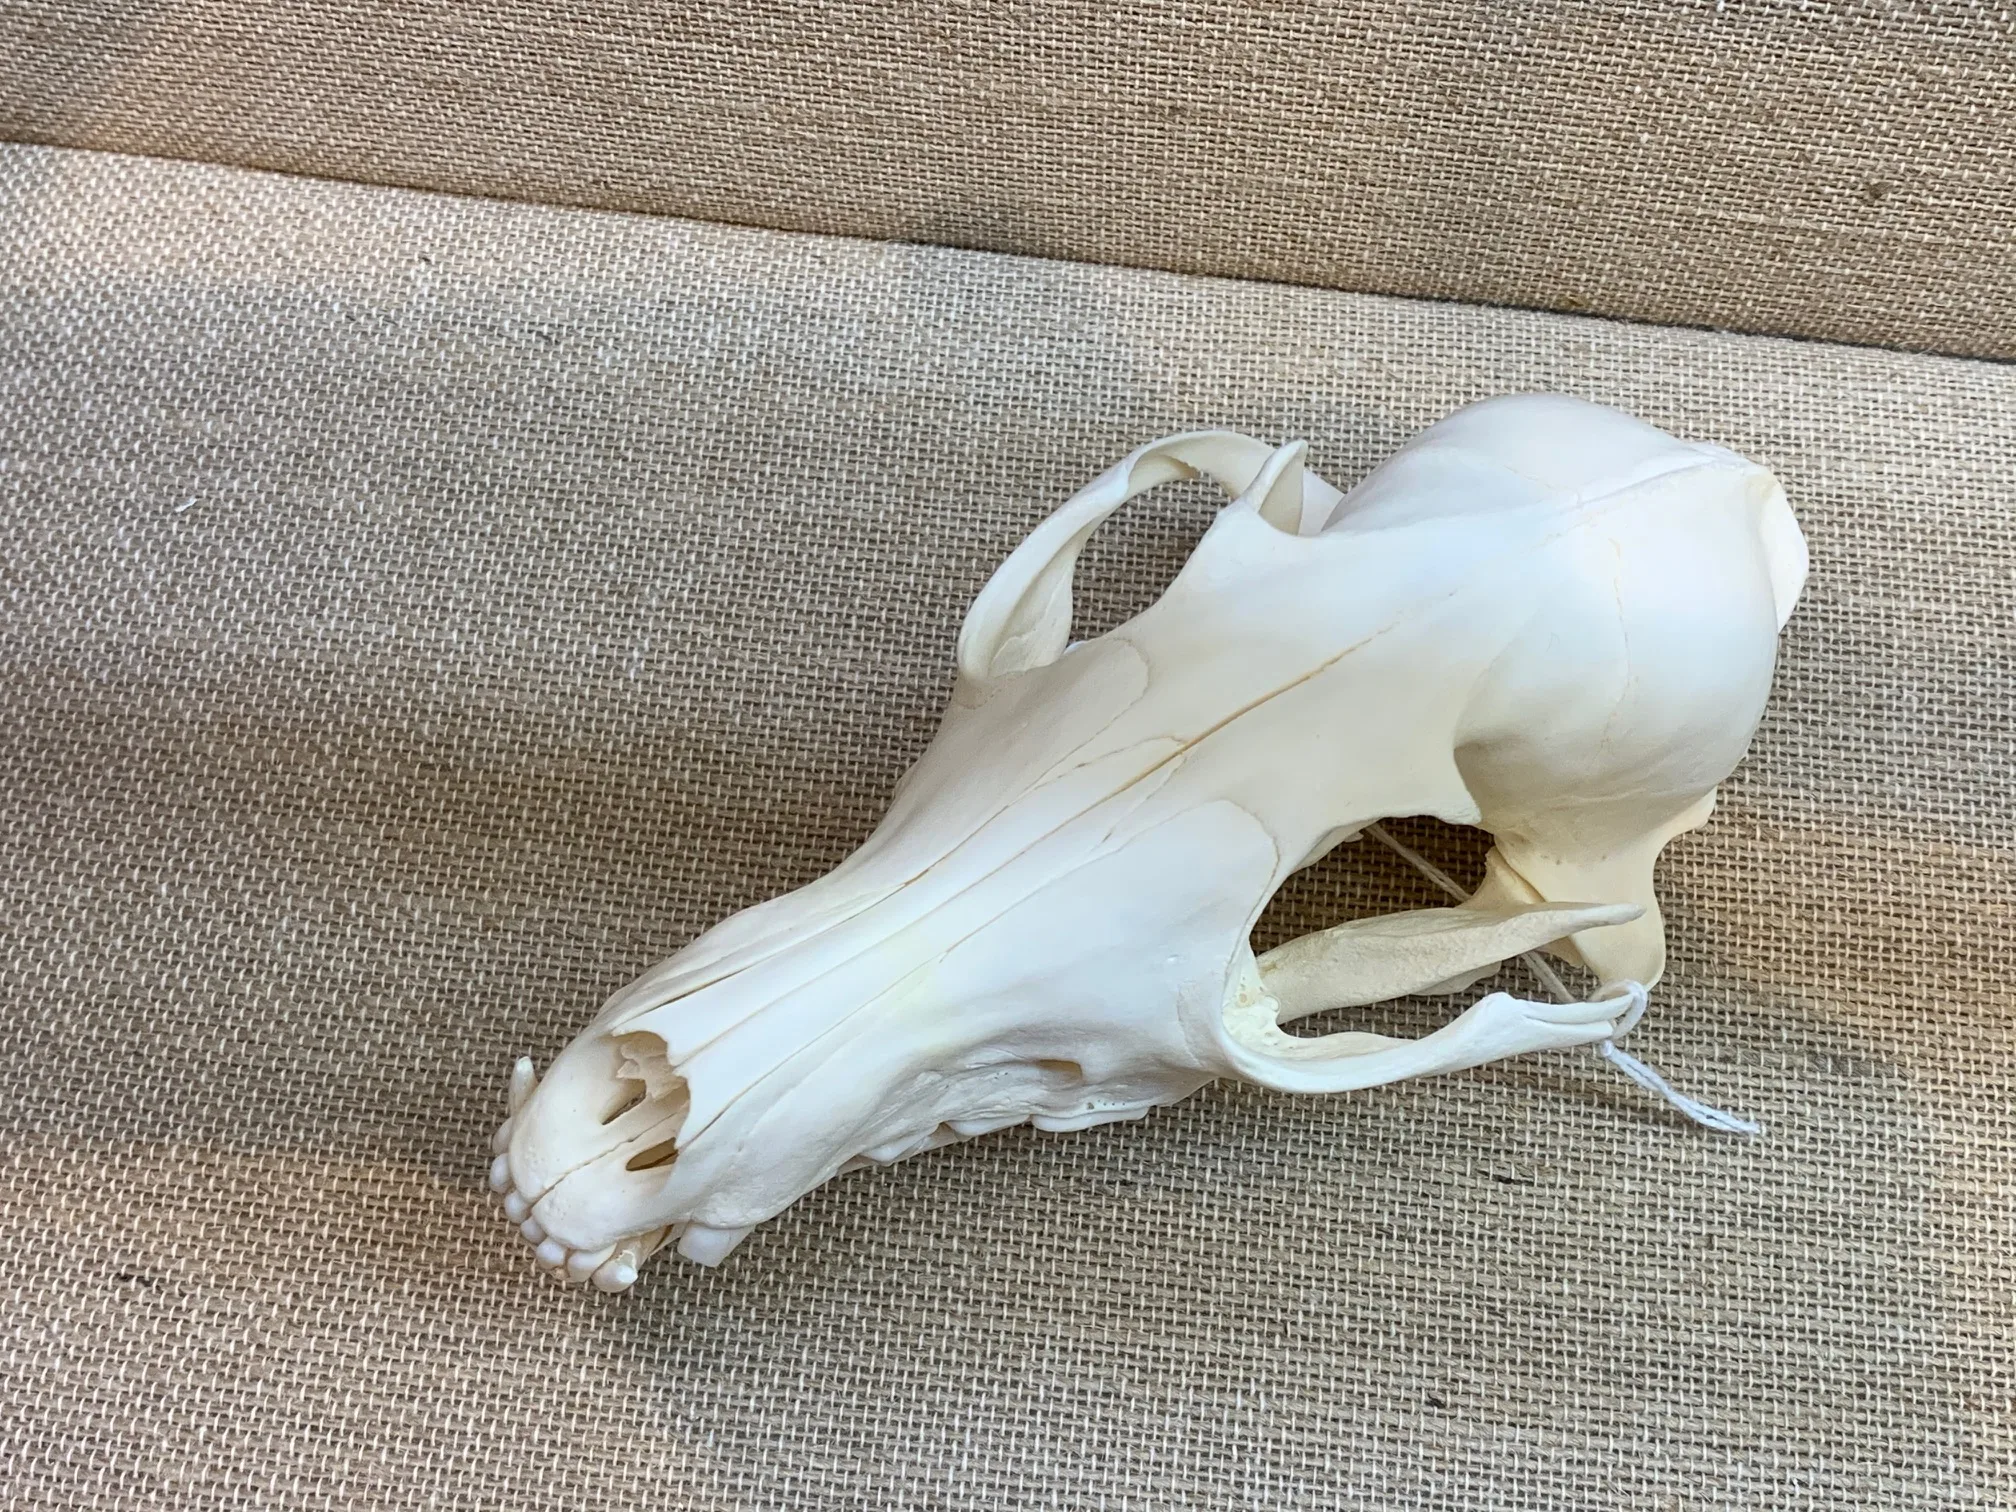 Red Fox Skull, Exceptional Prehistoric Online